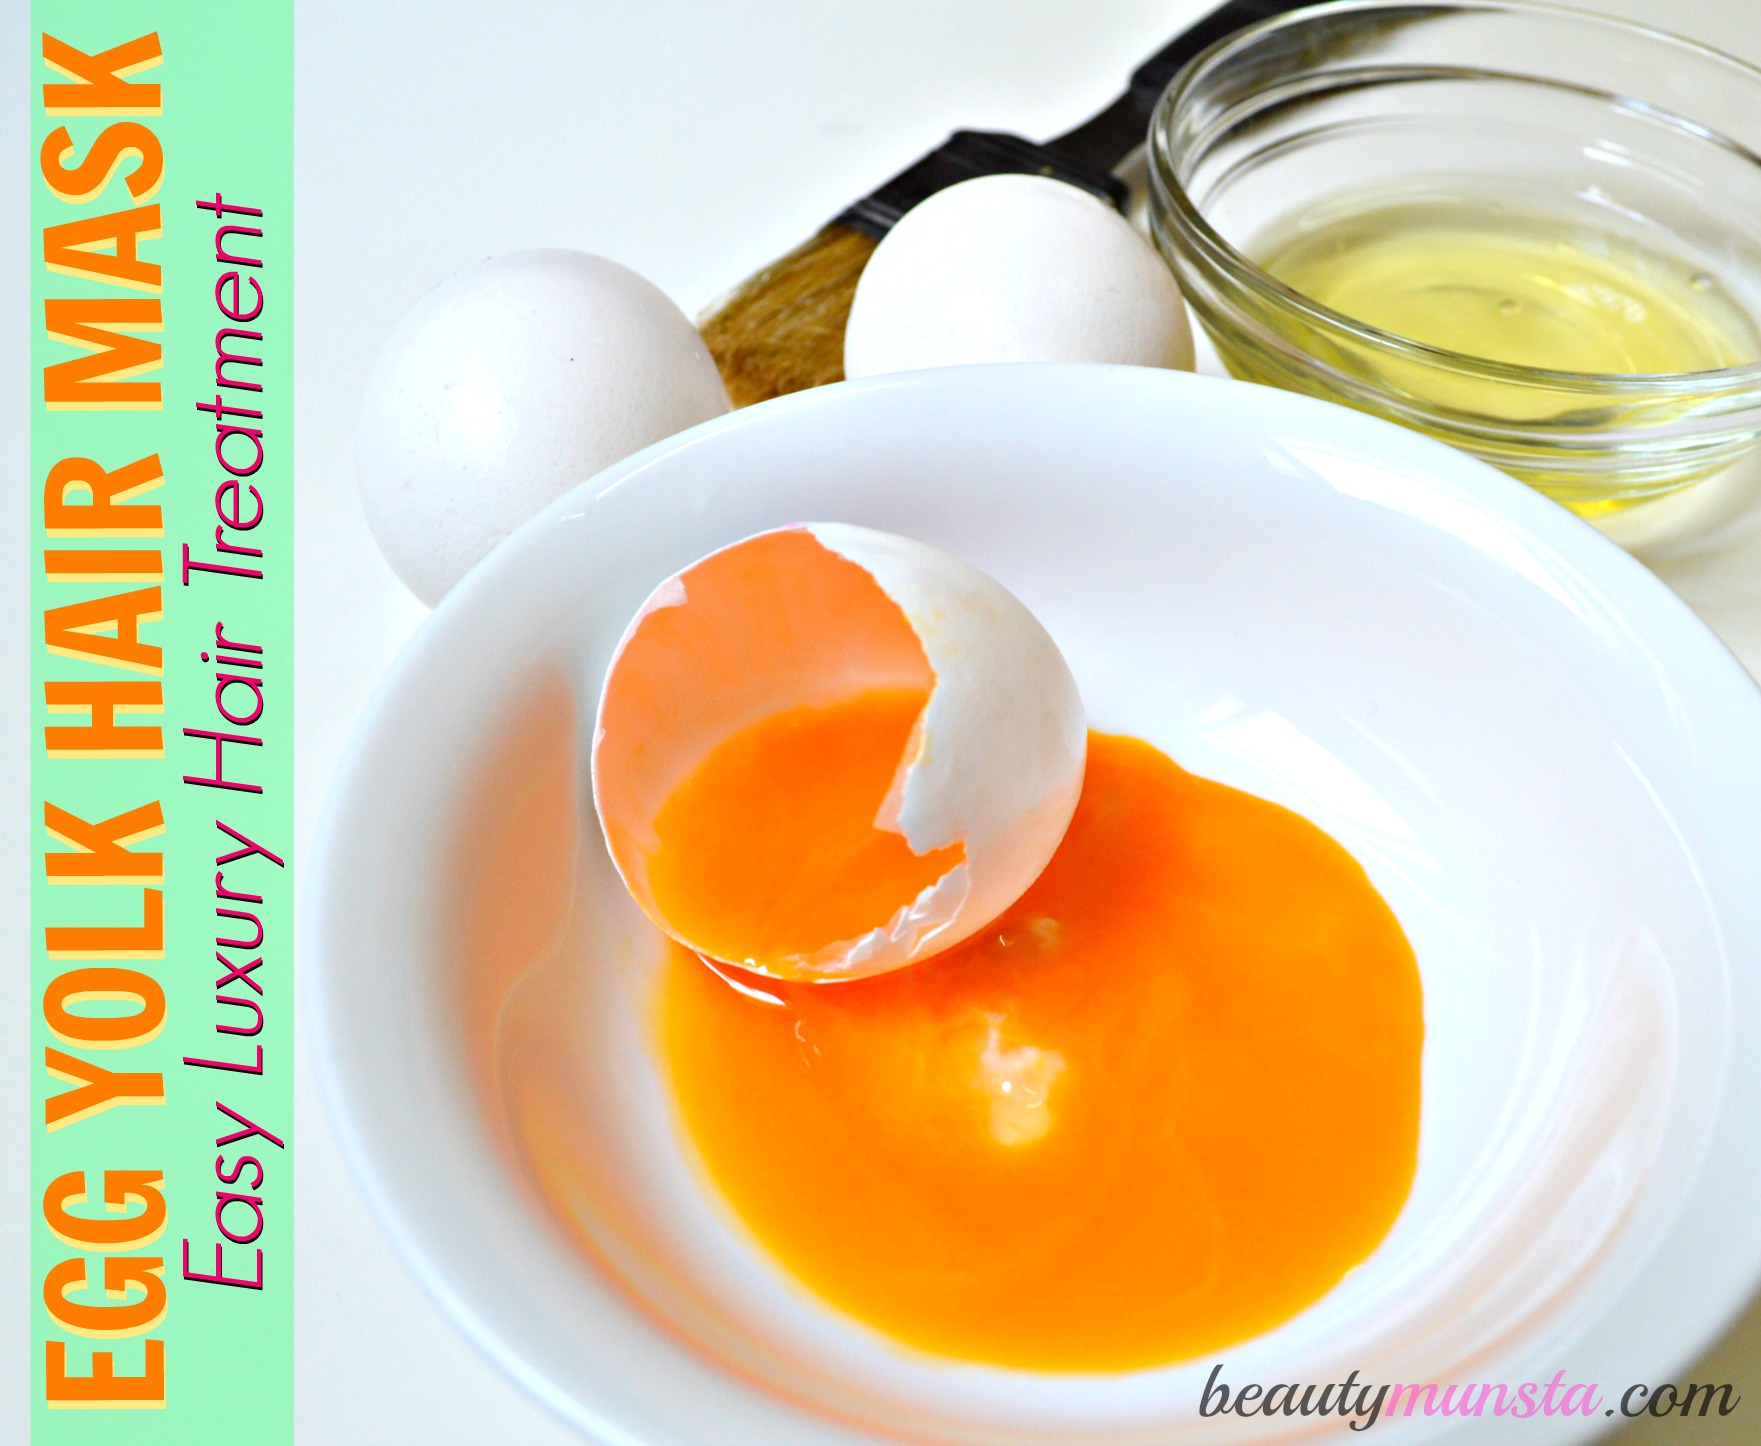 How to make an Egg Yolk Hair Mask at Home - beautymunsta - free natural  beauty hacks and more!